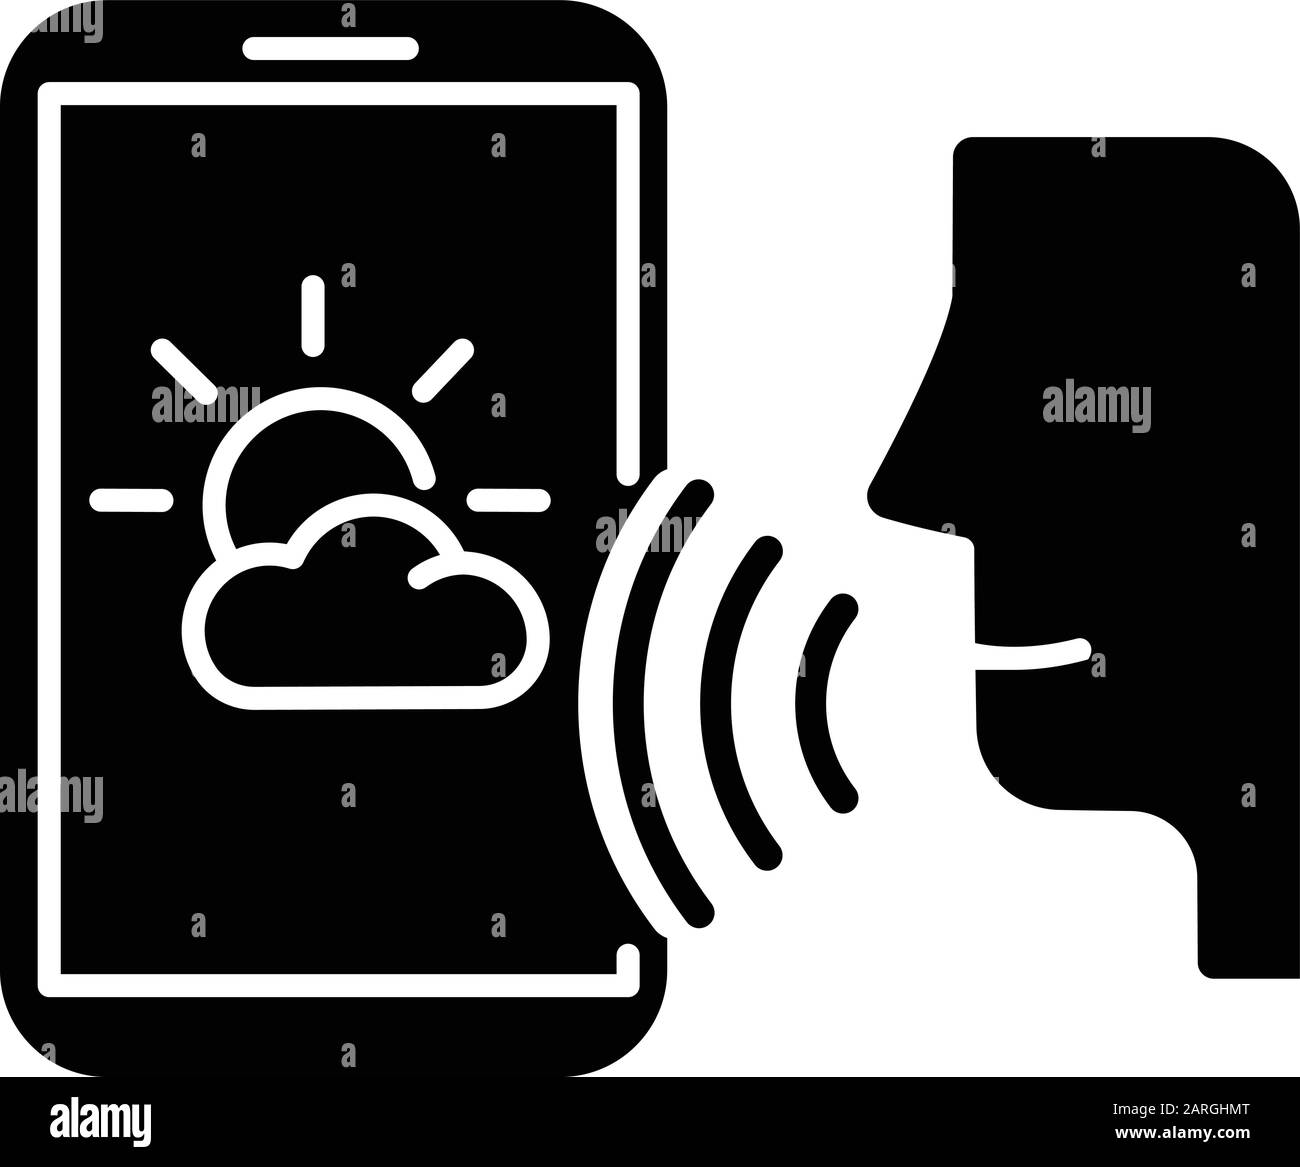 Editie Grote hoeveelheid toekomst Weather forecast voice search glyph icon. Smartphone sound command idea.  Meteorology app, mobile application. Audio request. Silhouette symbol.  Negati Stock Vector Image & Art - Alamy